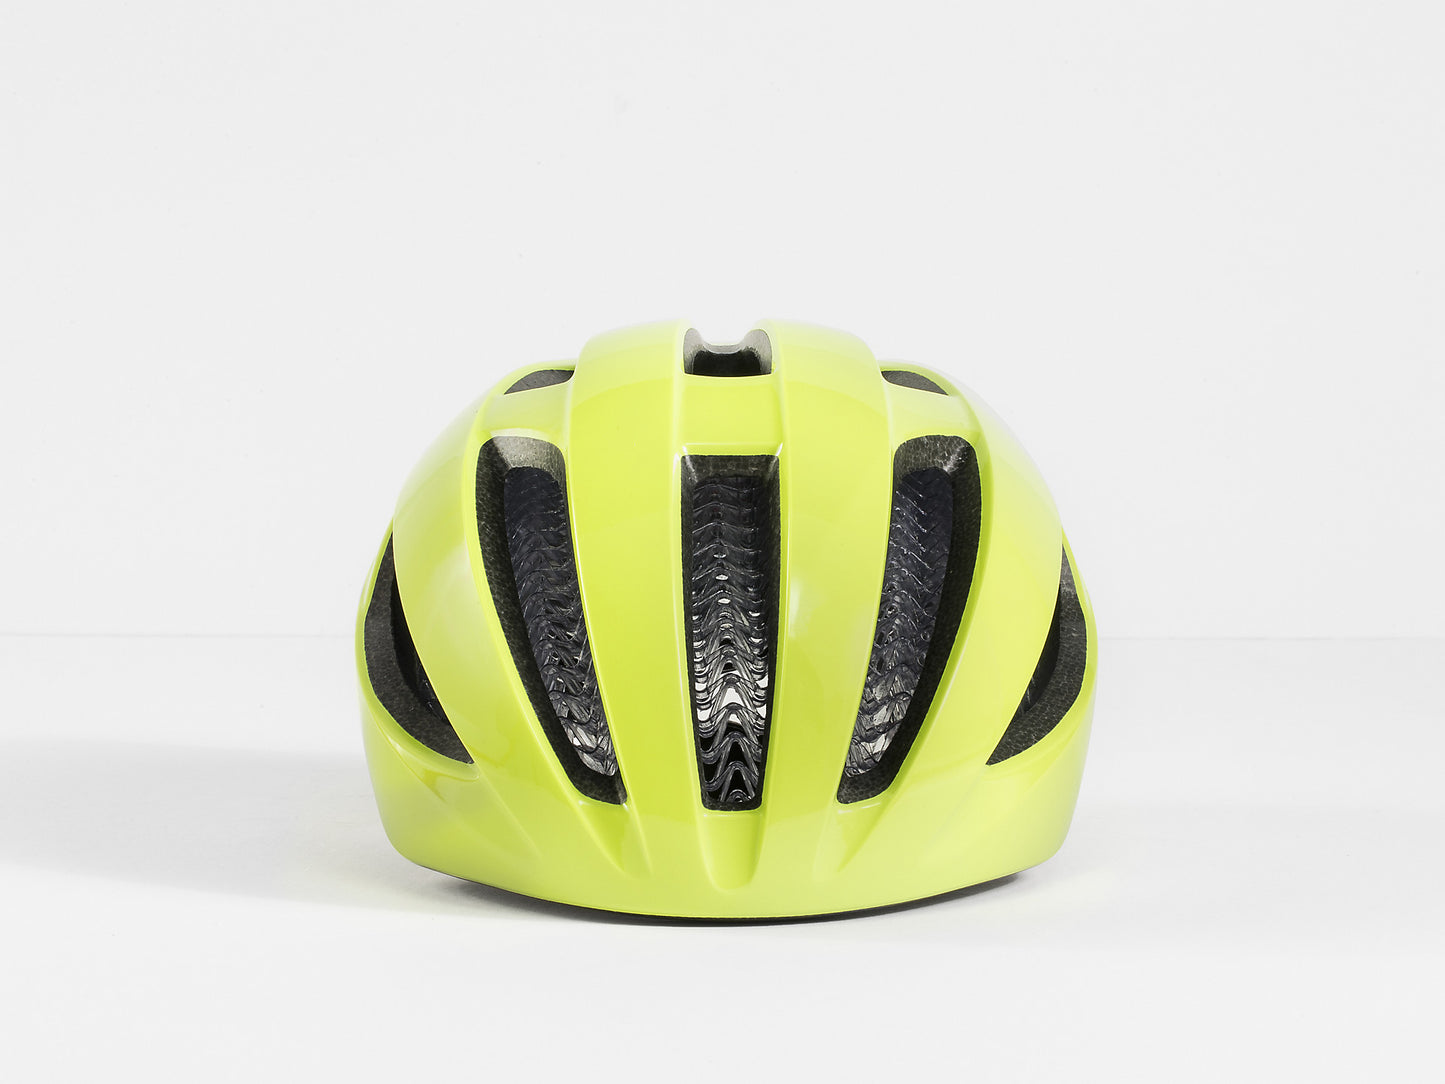 Bontrager Starvos WaveCel Cycling Helmet